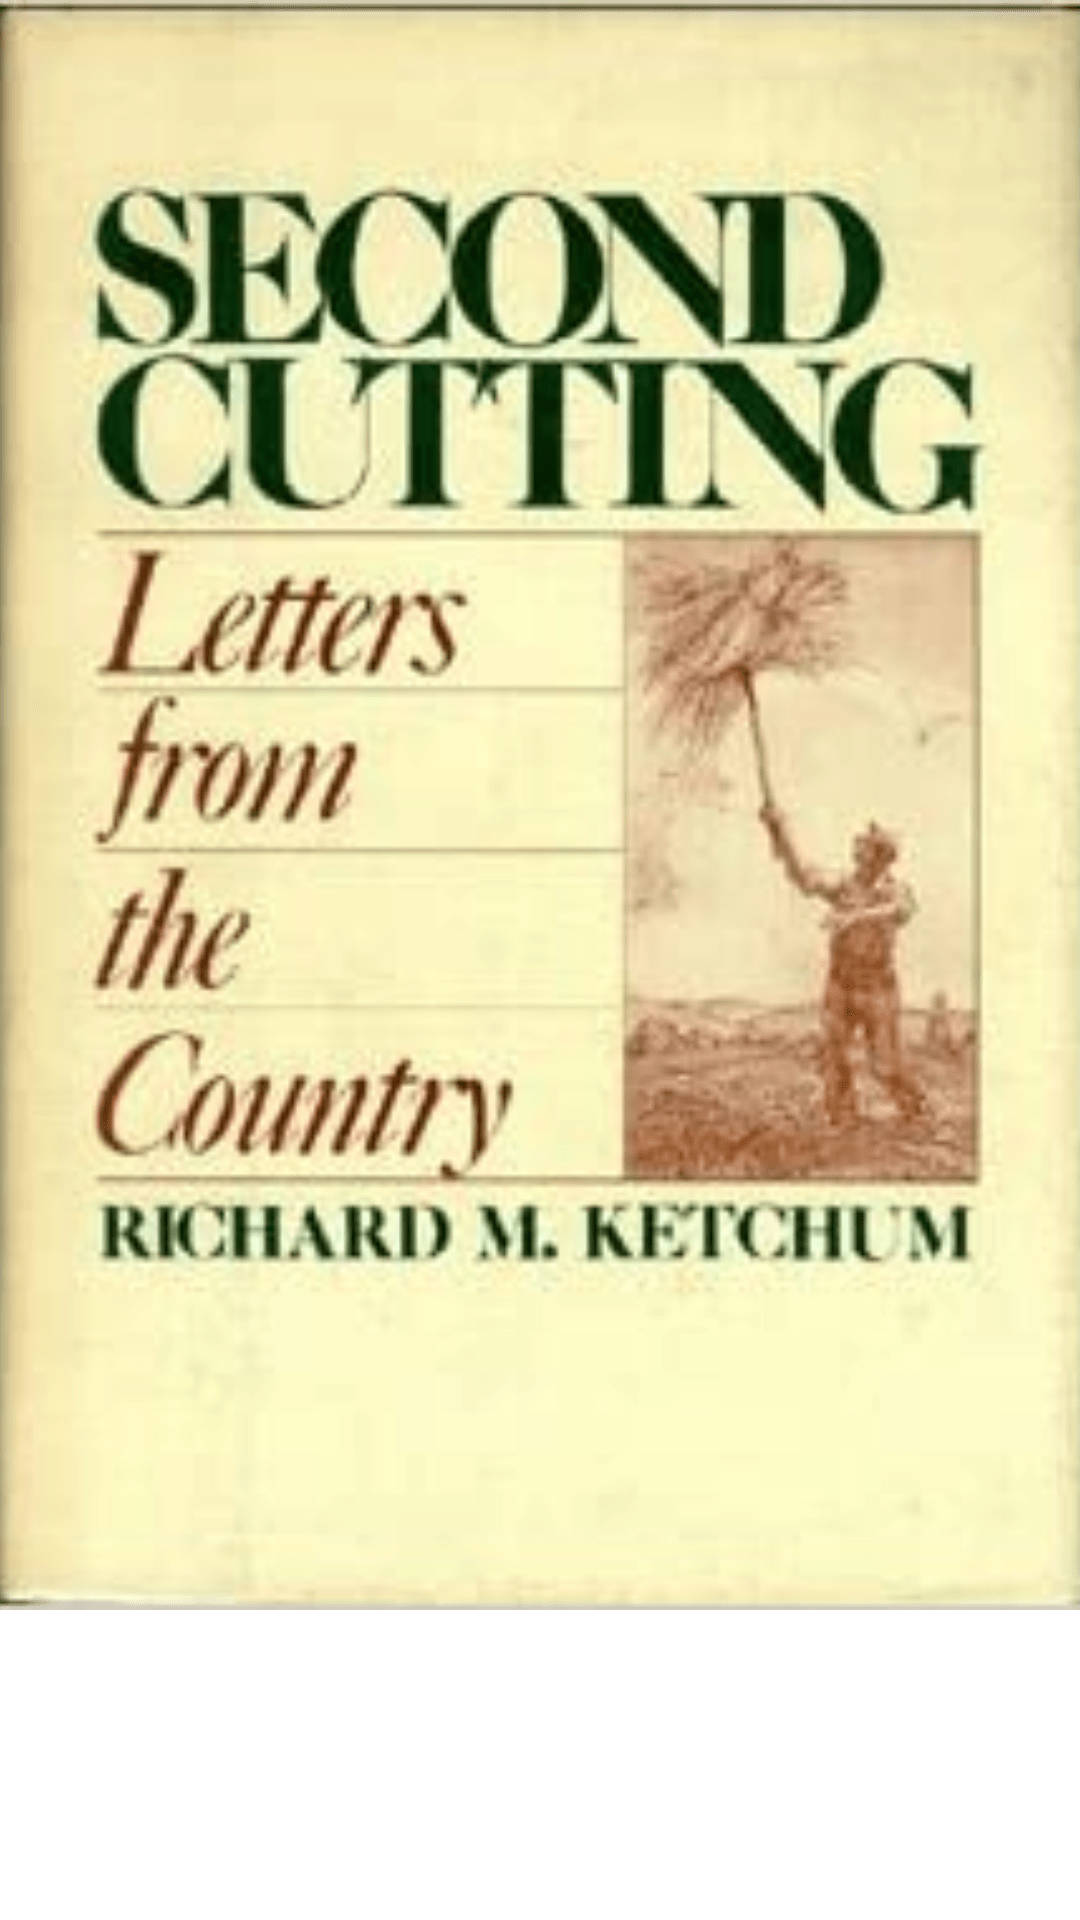 Second Cutting by Richard M. Ketchum